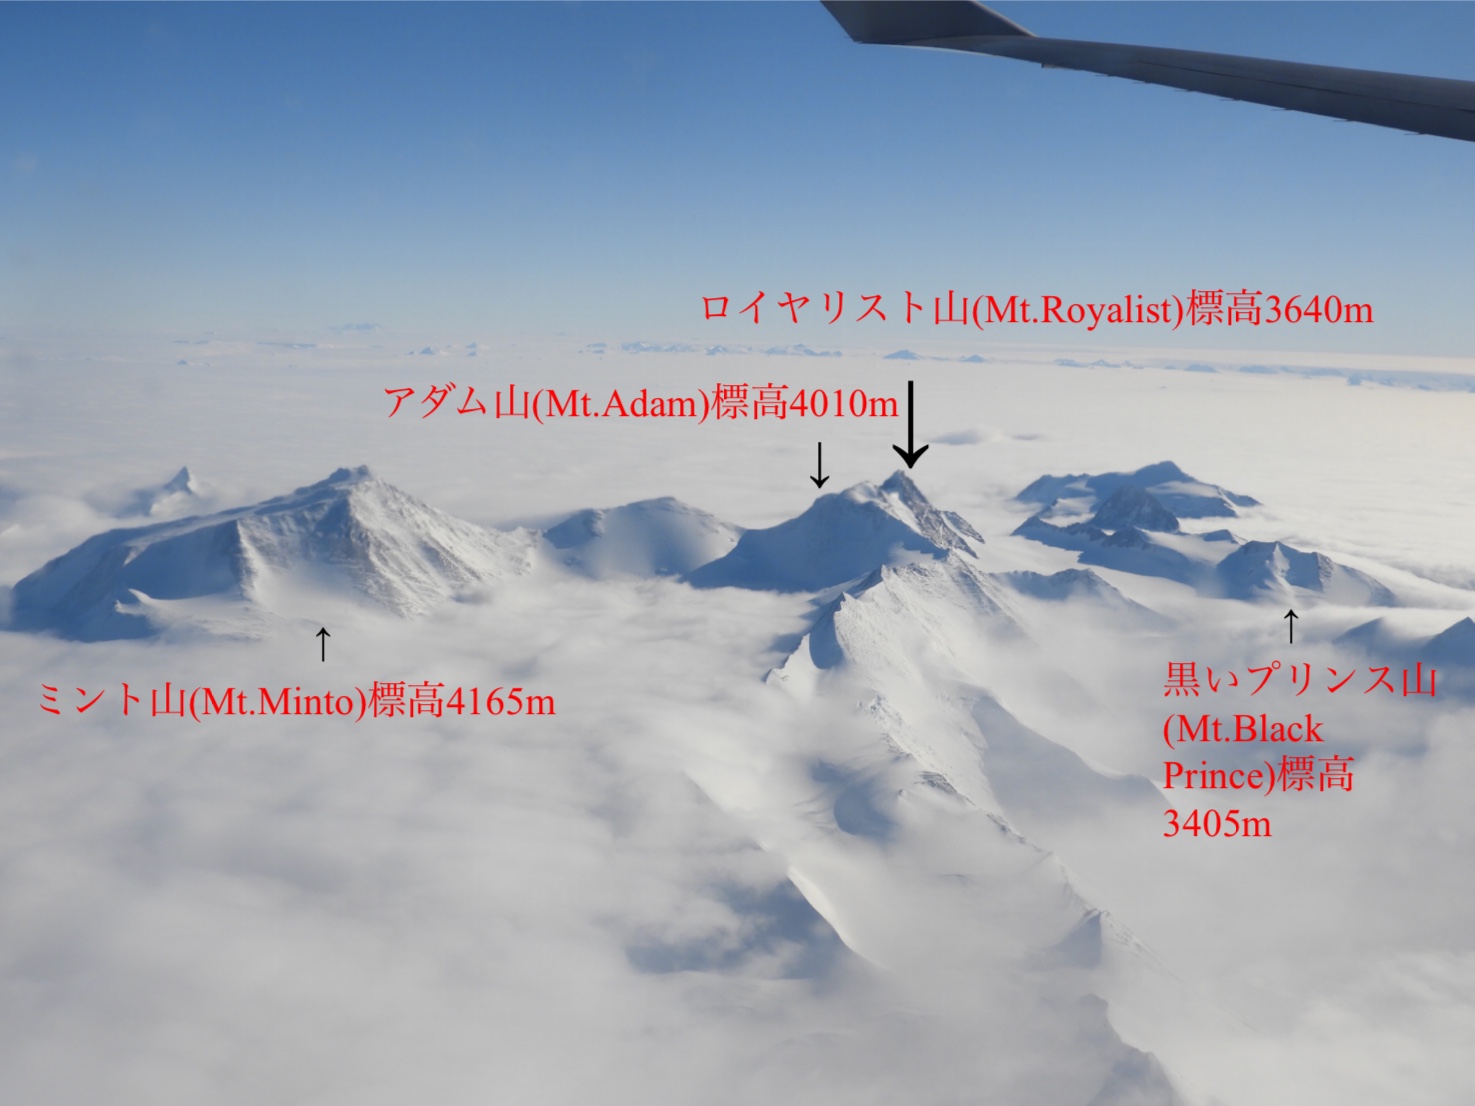 Mount.Minto, Mount.adam, Mount Royalist, Mount Black Prince,Antarctica,南極の山々